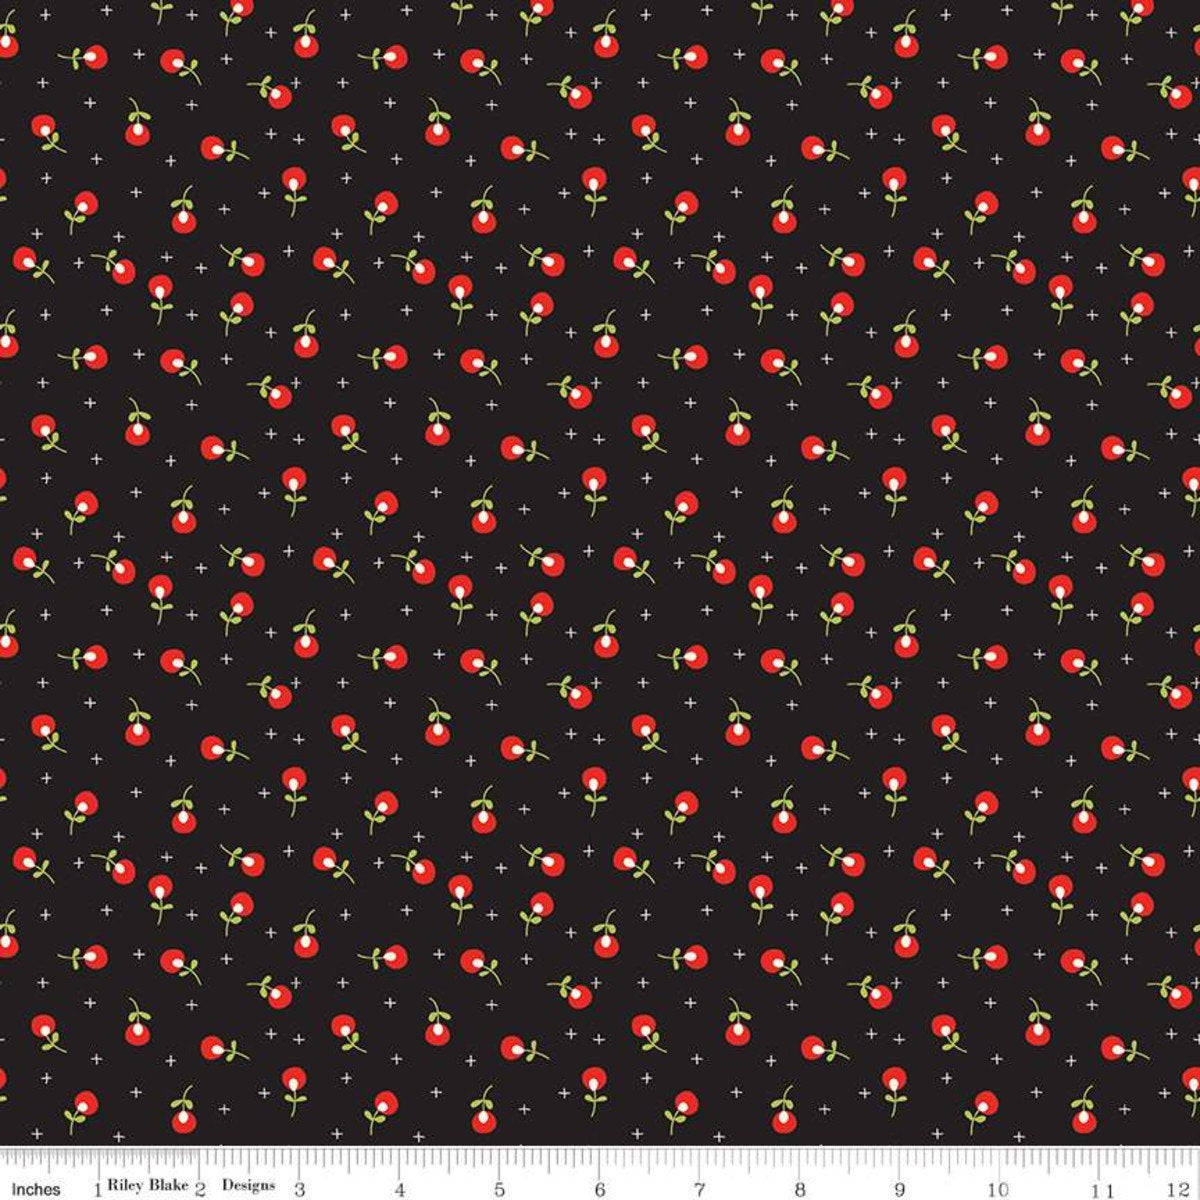 Merry Little Christmas - Berries black - Sandy Gervais - Riley Blake Designs half yard fabric - holiday